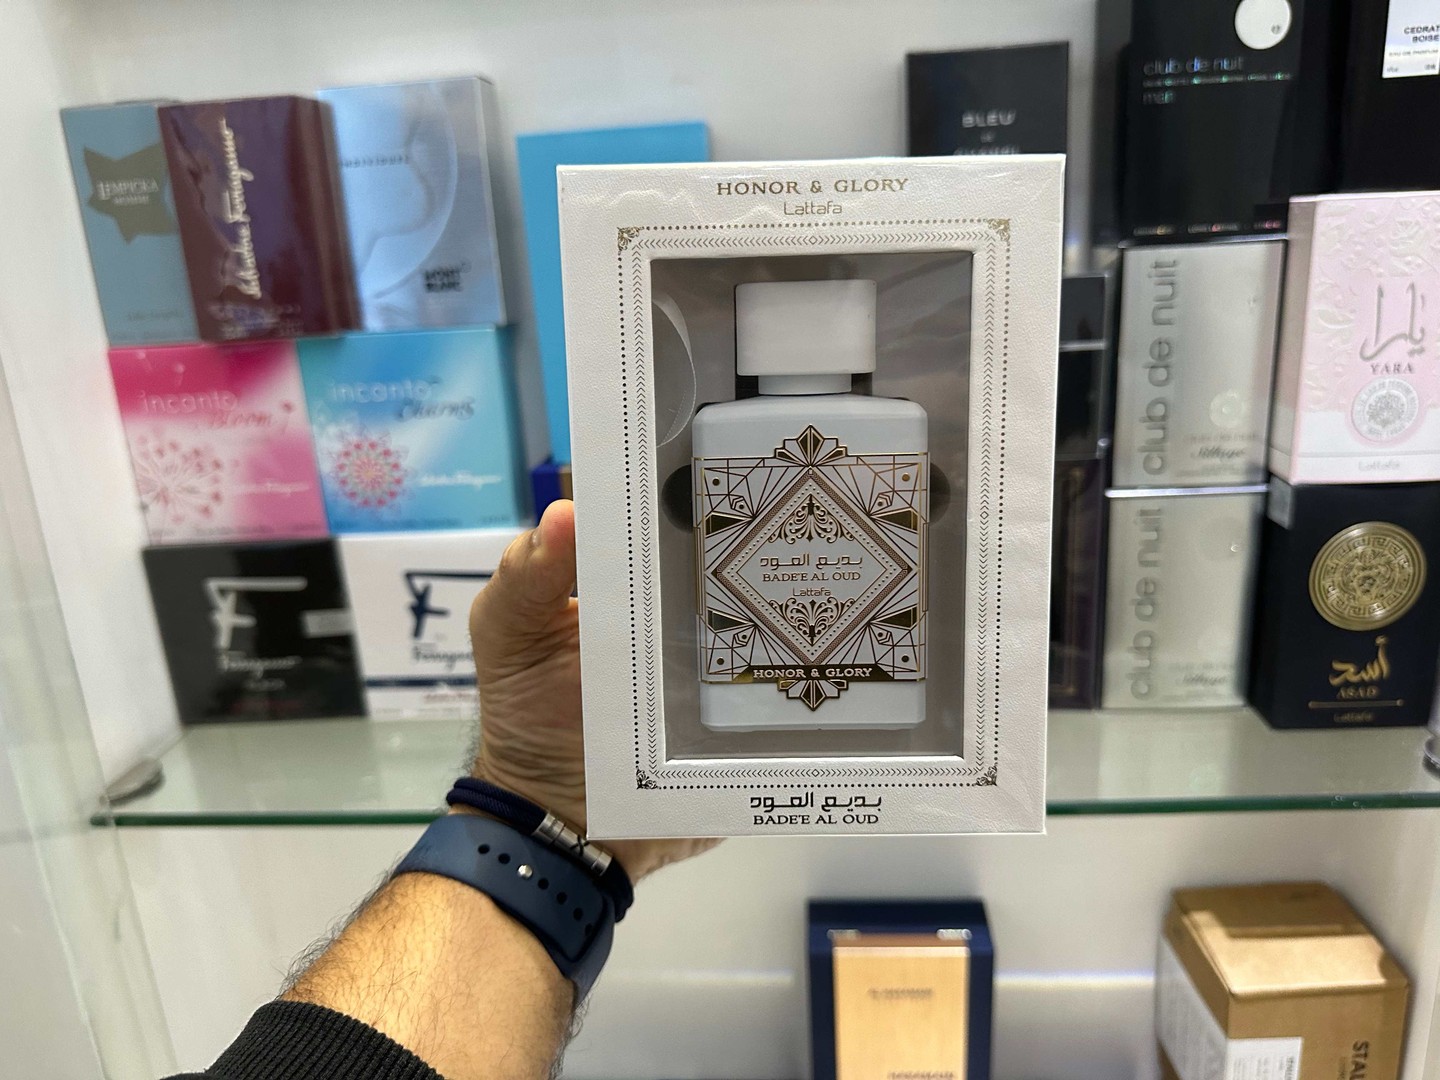 joyas, relojes y accesorios - Perfume Lattafa Honor of Glory BADEE AL OUD - Nuevo, Original , RD$ 4,250 NEG 0